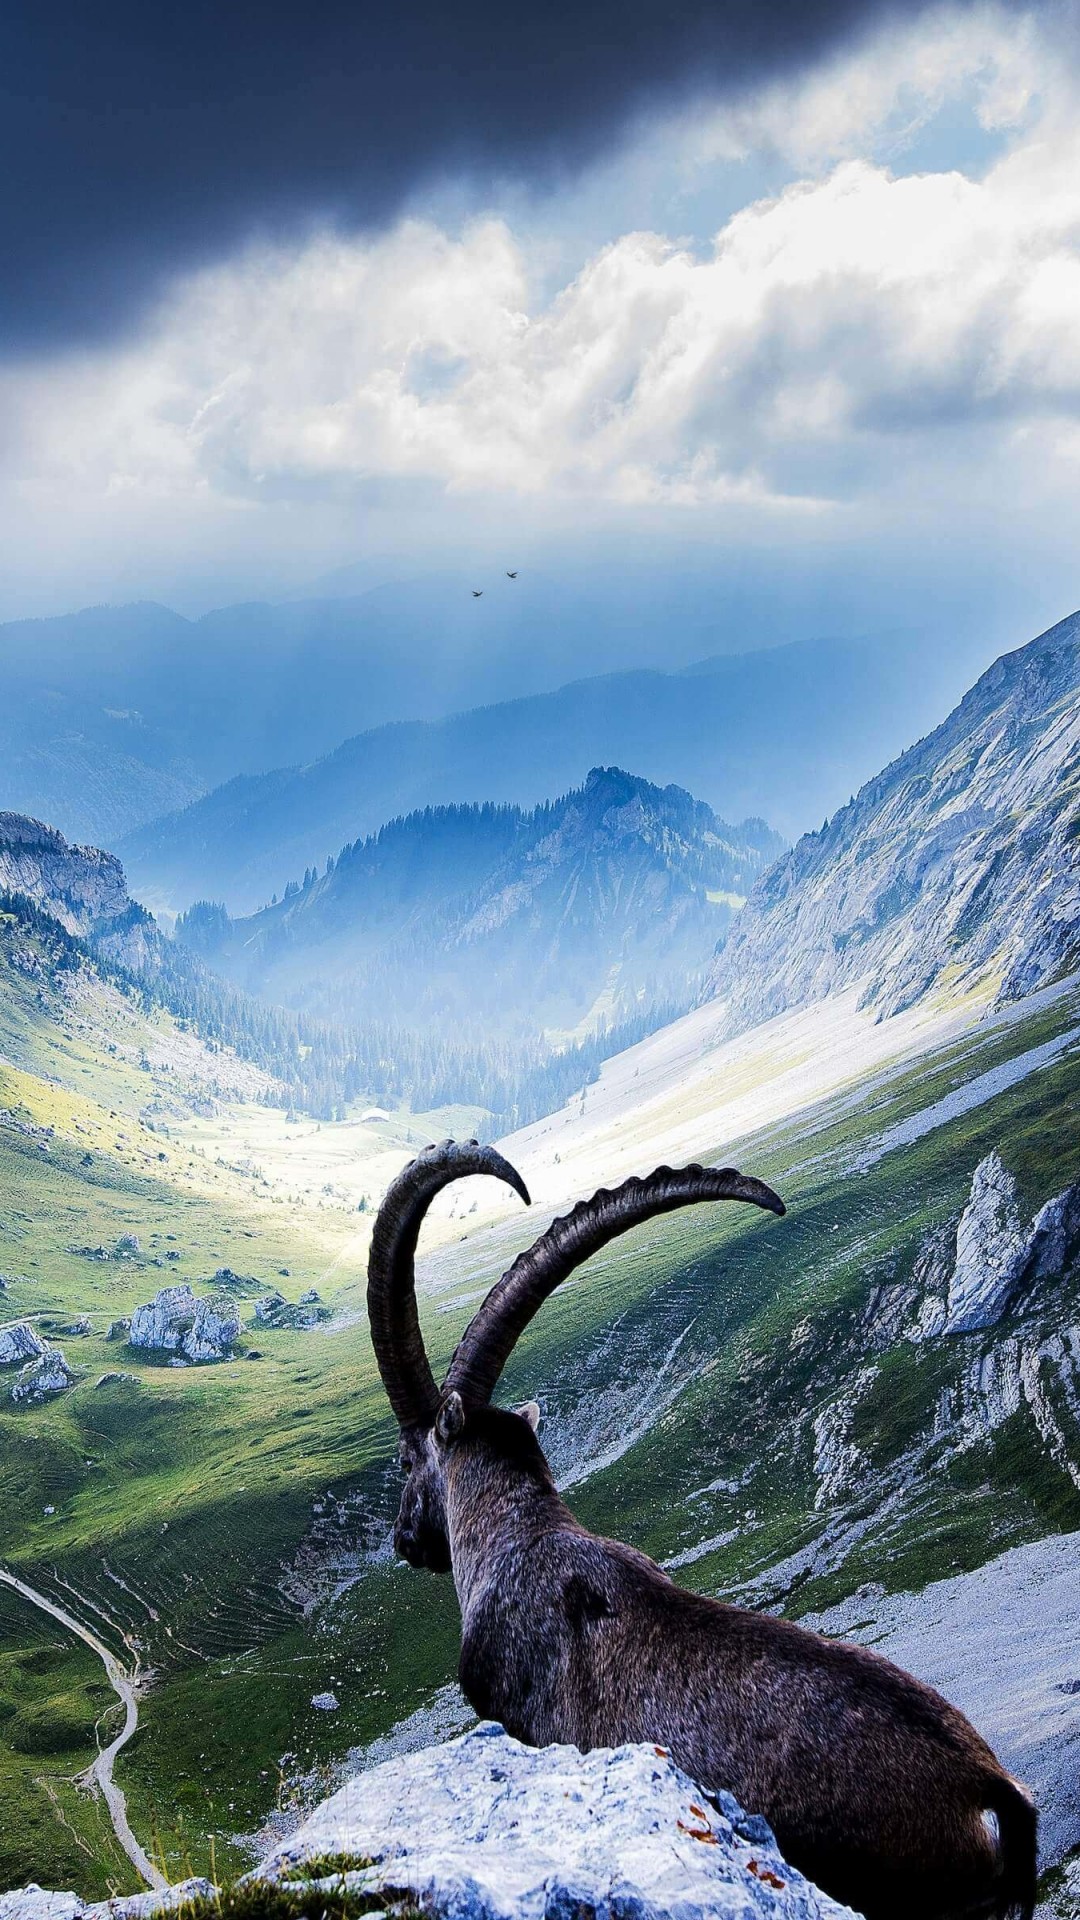 Goat at Pilatus, Switzerland Wallpaper for SAMSUNG Galaxy Note 3